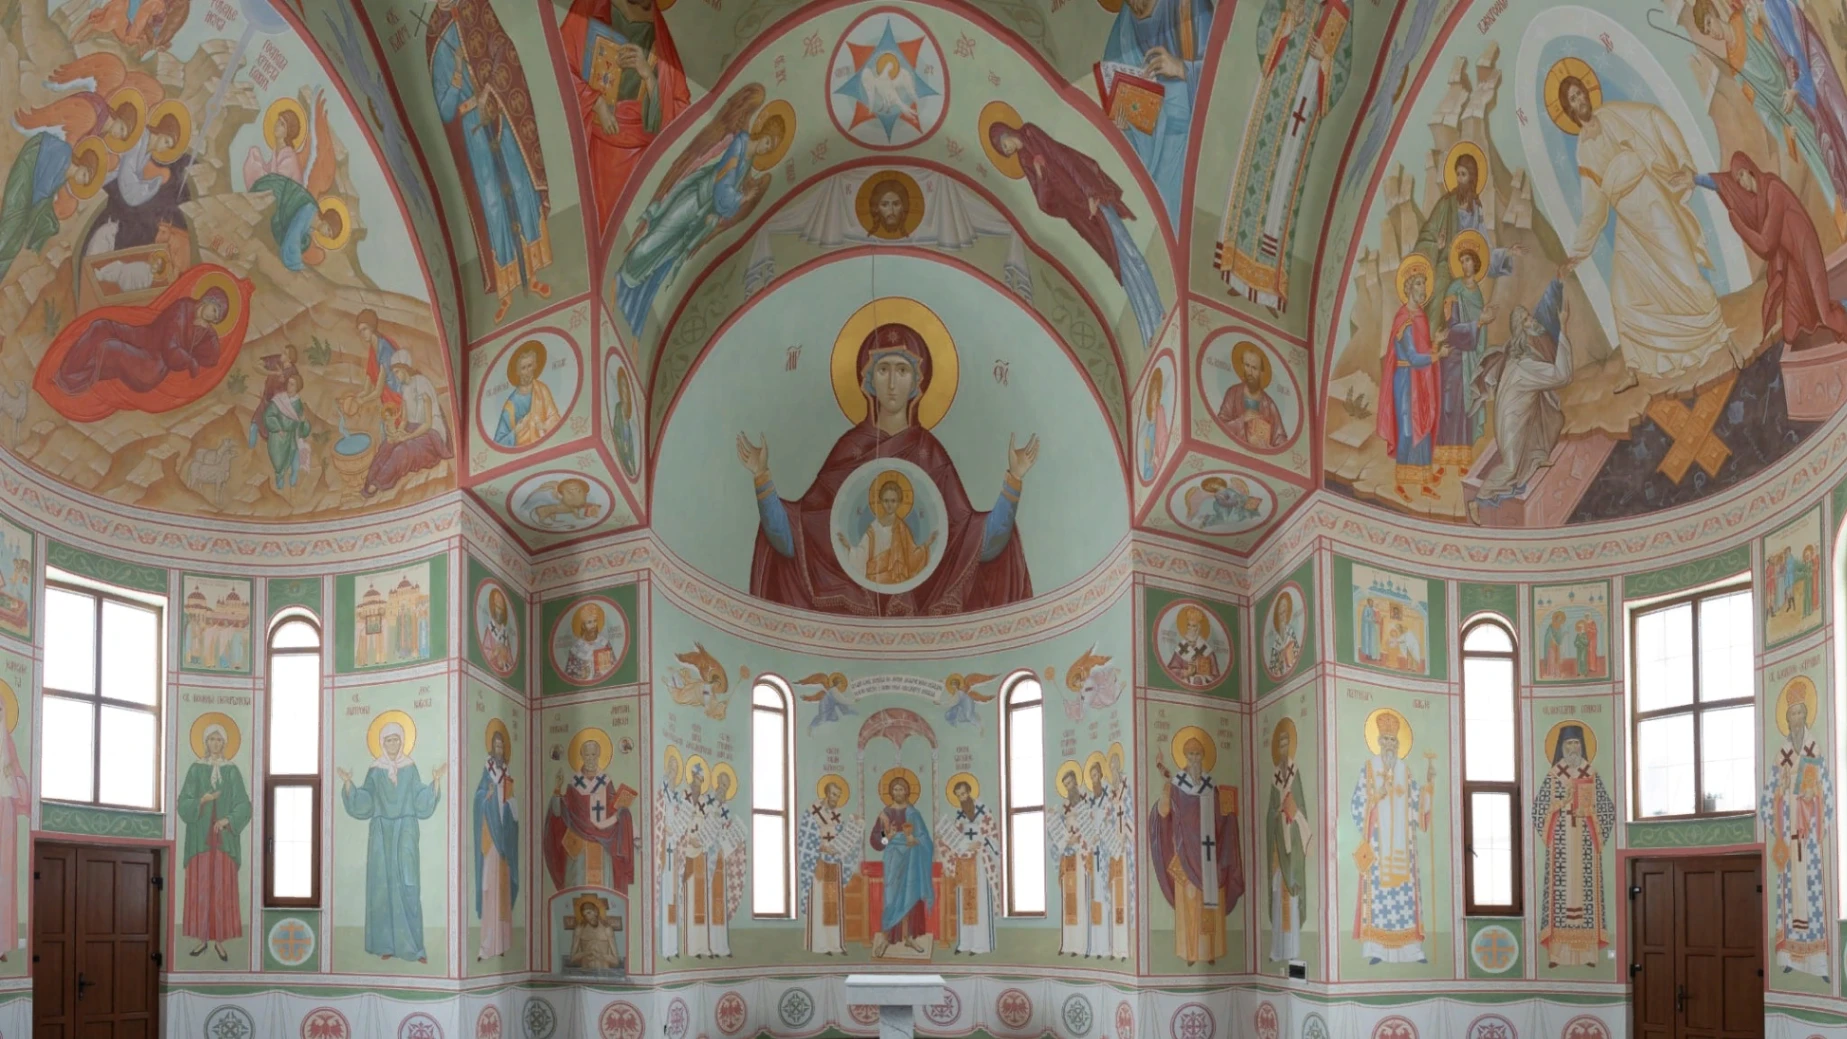 Peinture murale du monastère de la bienheureuse Matrona de Moscou dans le village de Ritešić en Bosnie-Herzégovine